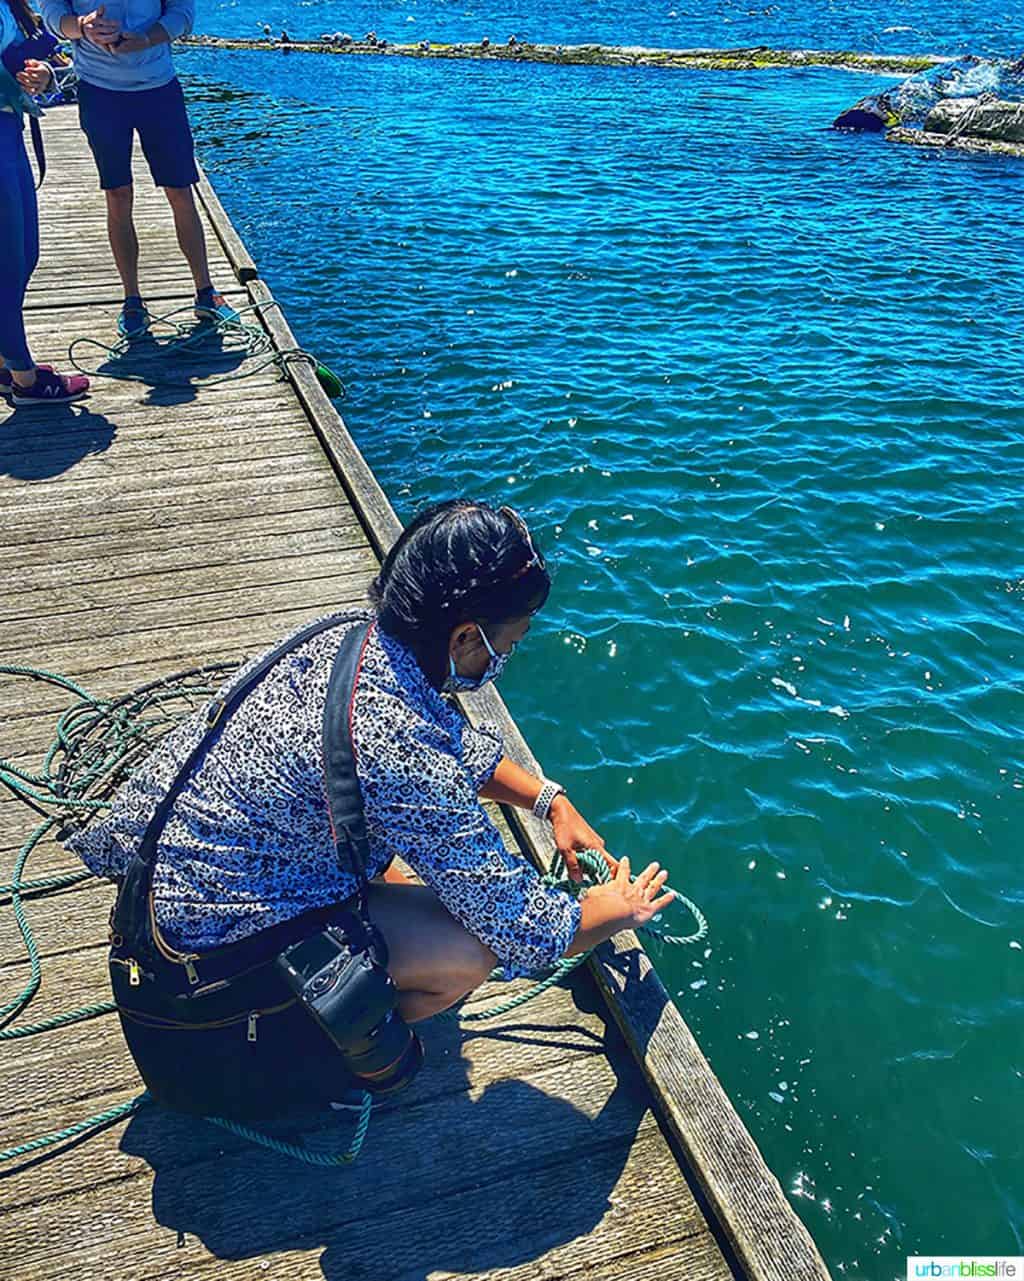 Marlynn Schotland crabbing at Kelly's Brighton Marina in Rockaway, Oregon